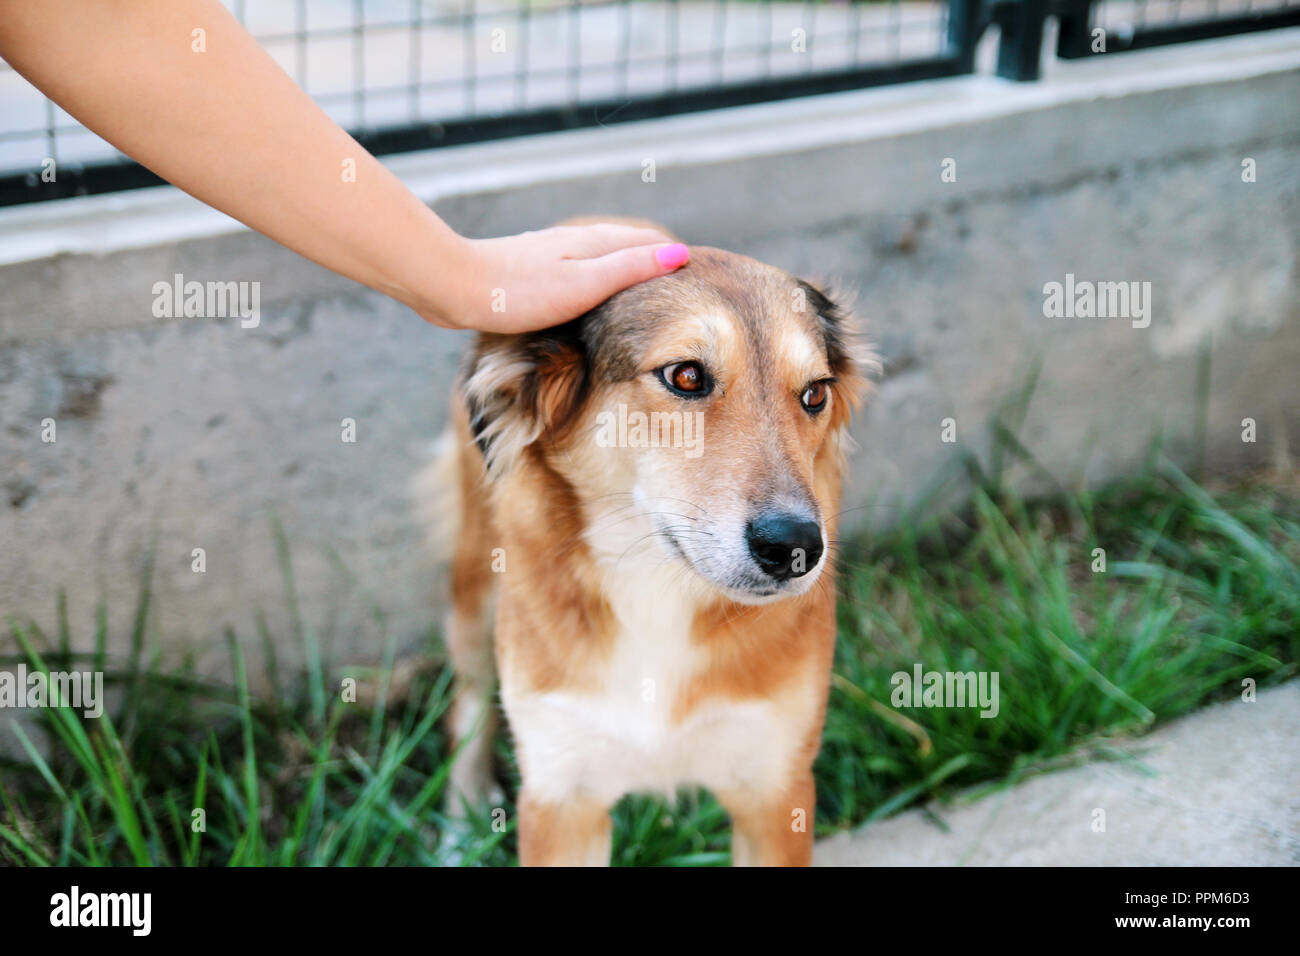 do dogs like rough petting